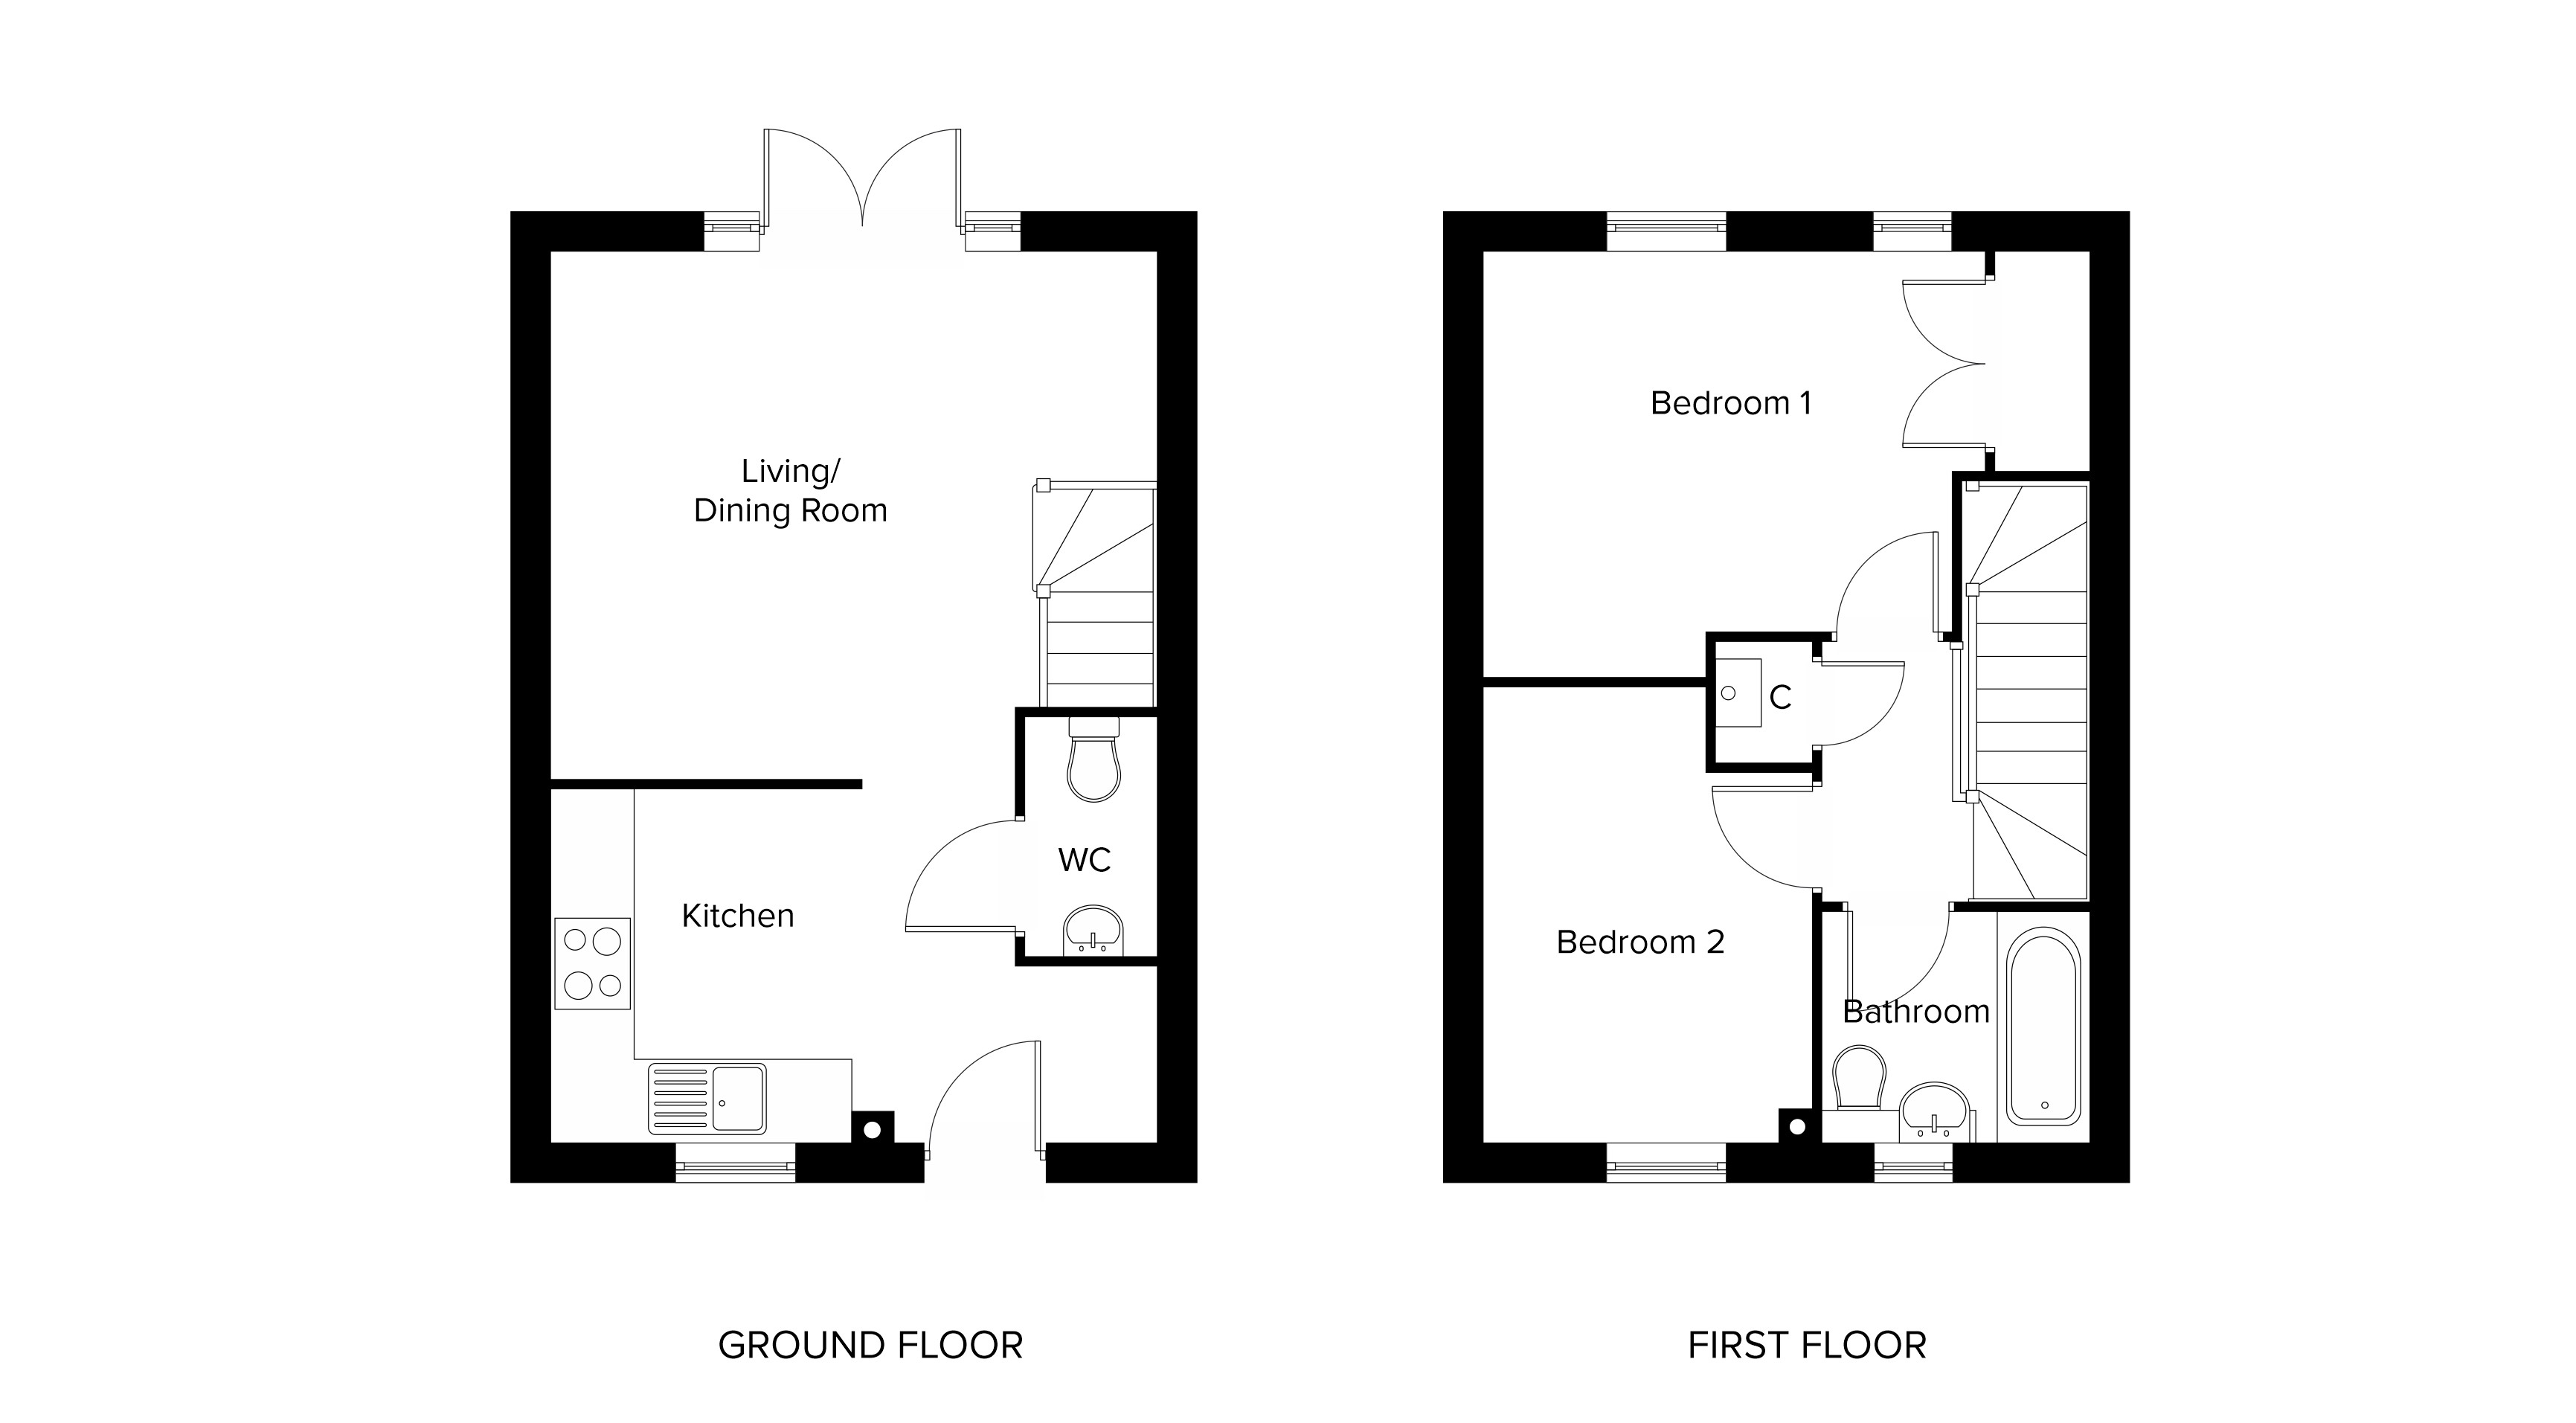 The Kingfisher floor plans